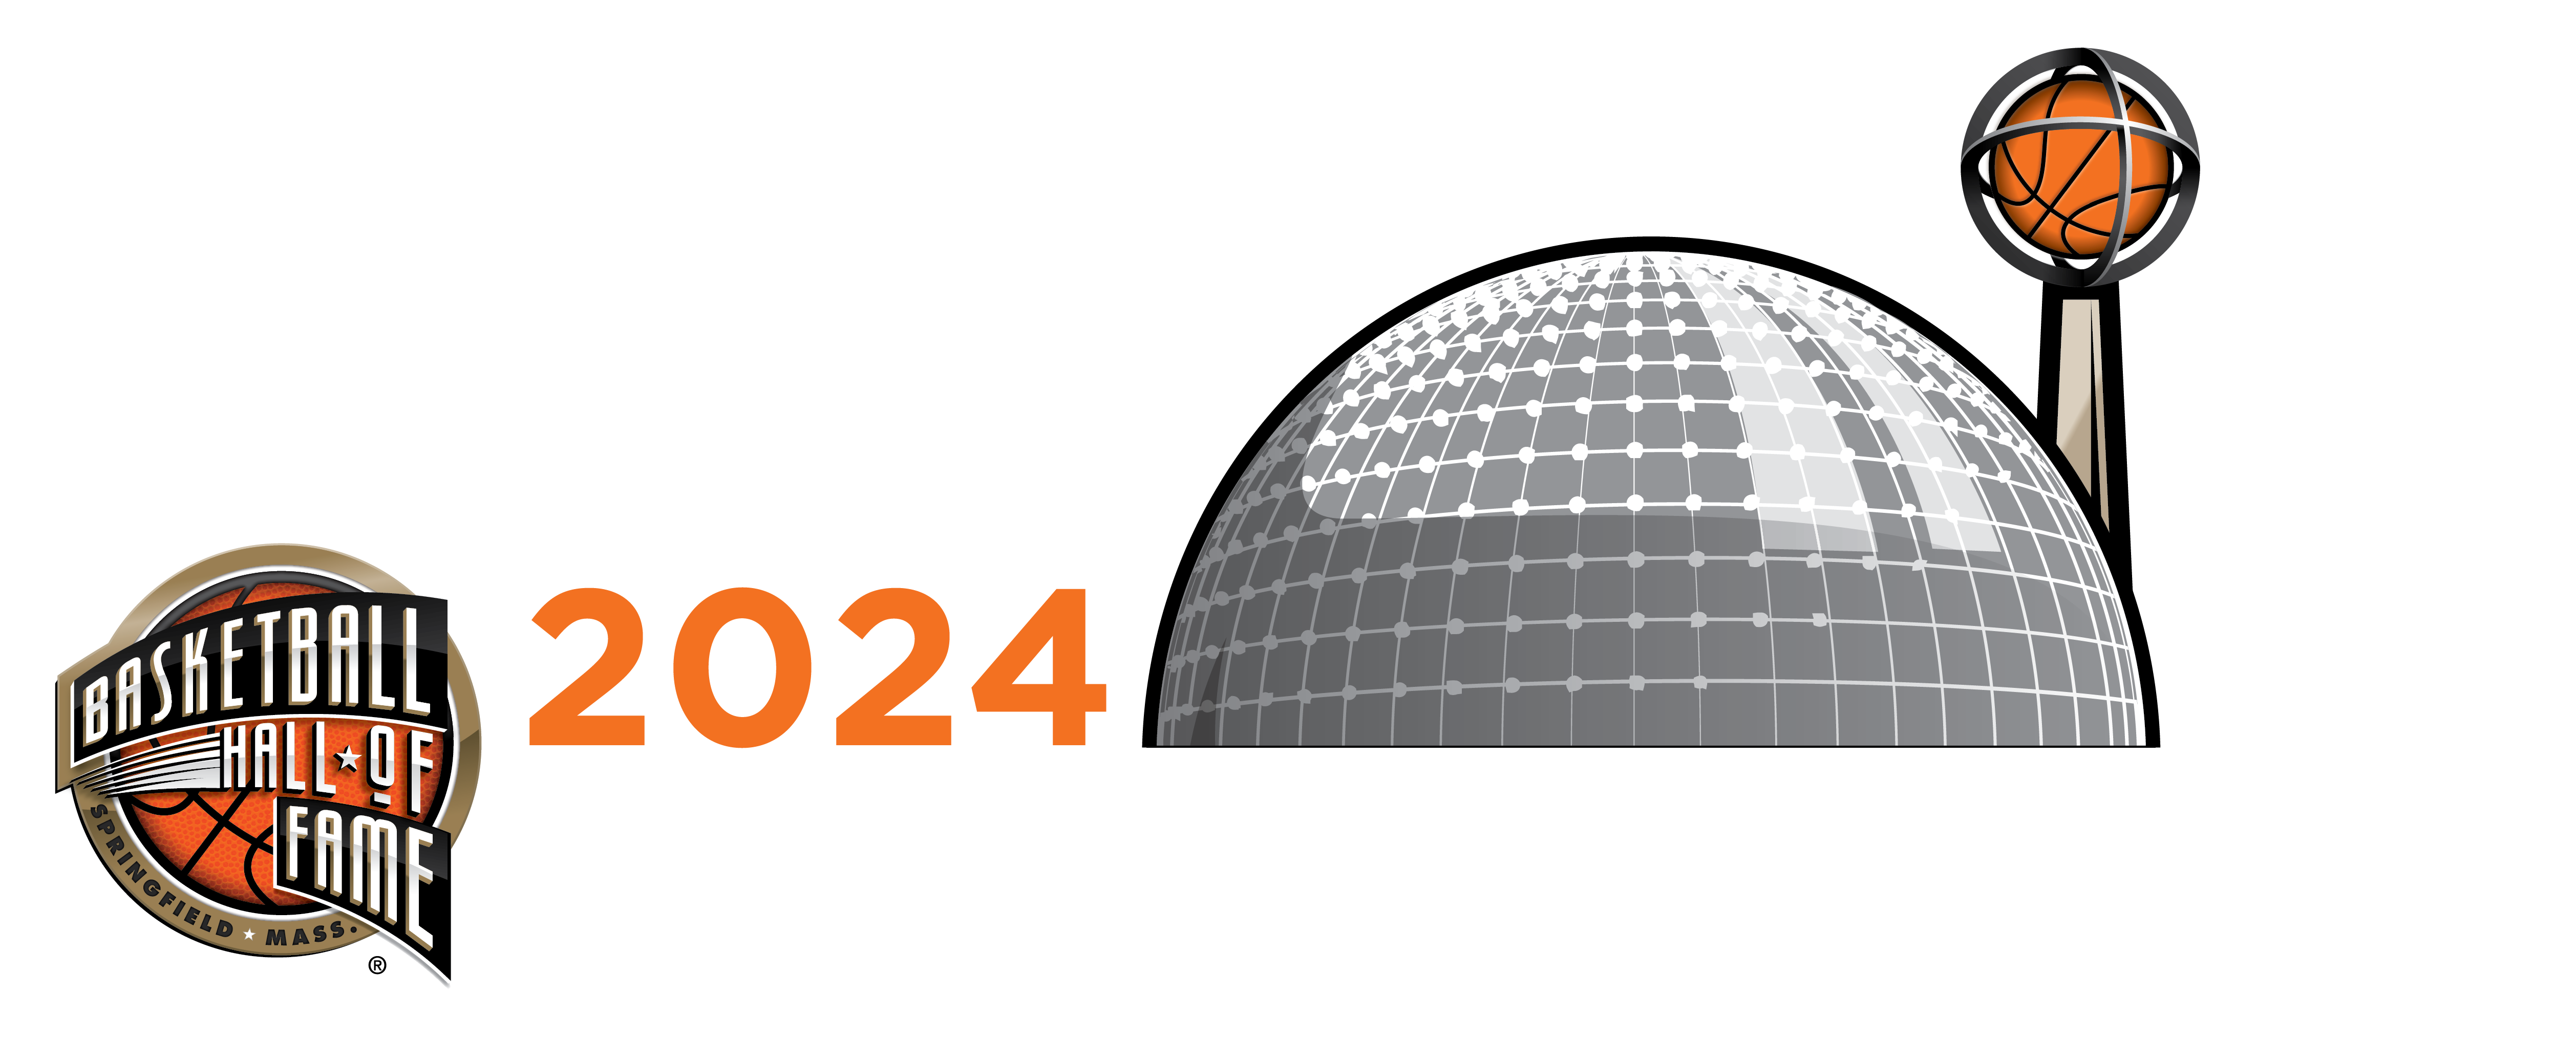 Enshrinement 2024 Event Logo